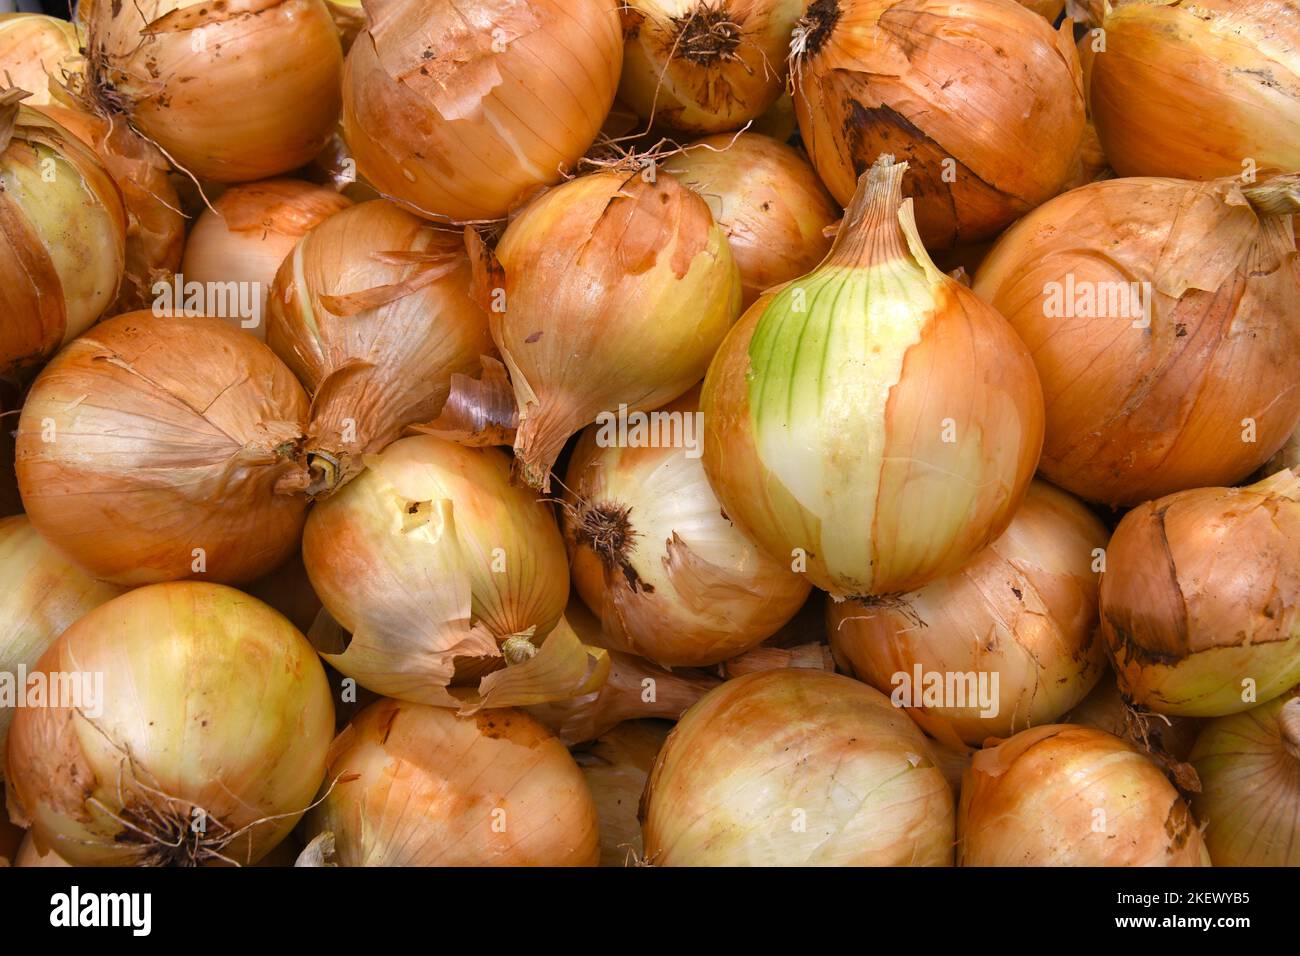 Pila de cebolla fresca Foto de stock